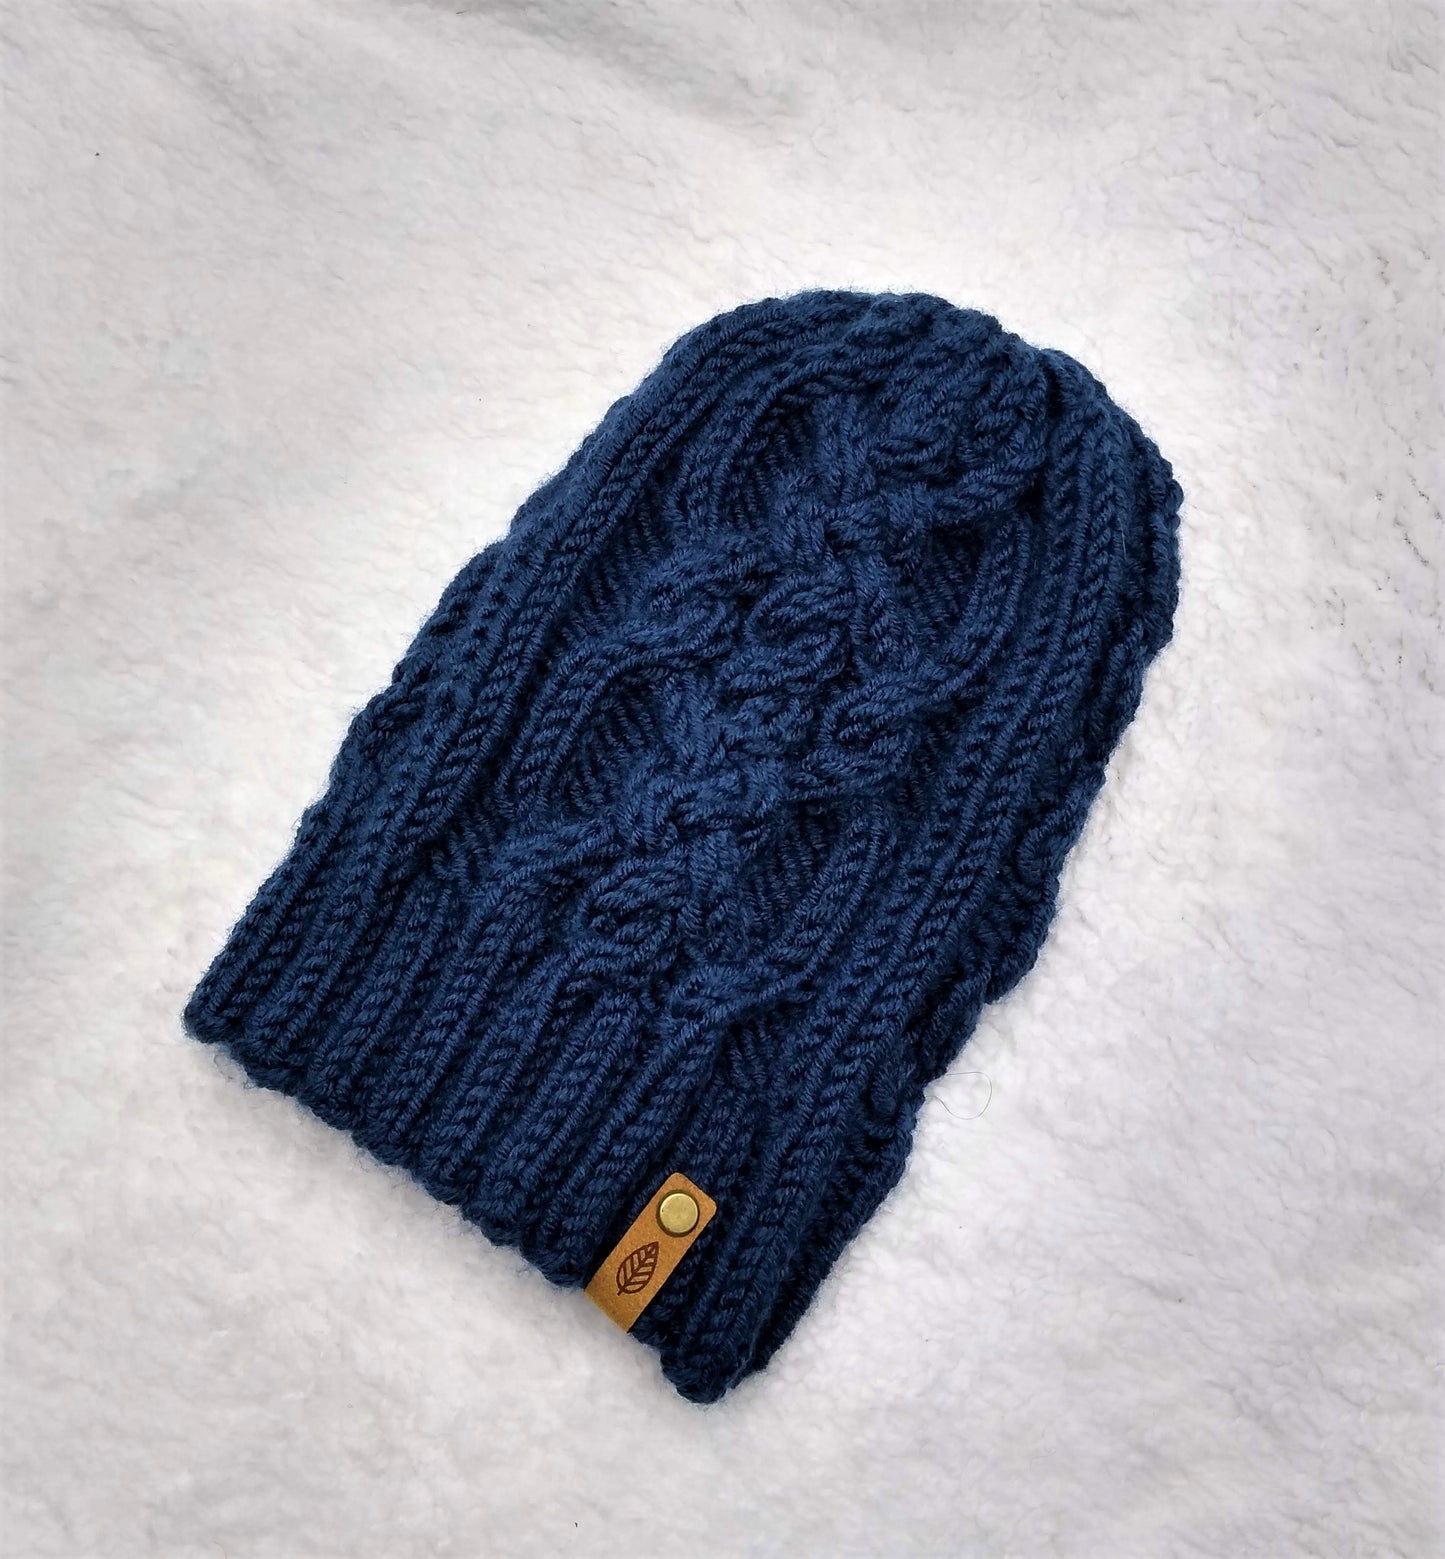 Alastor Hat Knitting Pattern